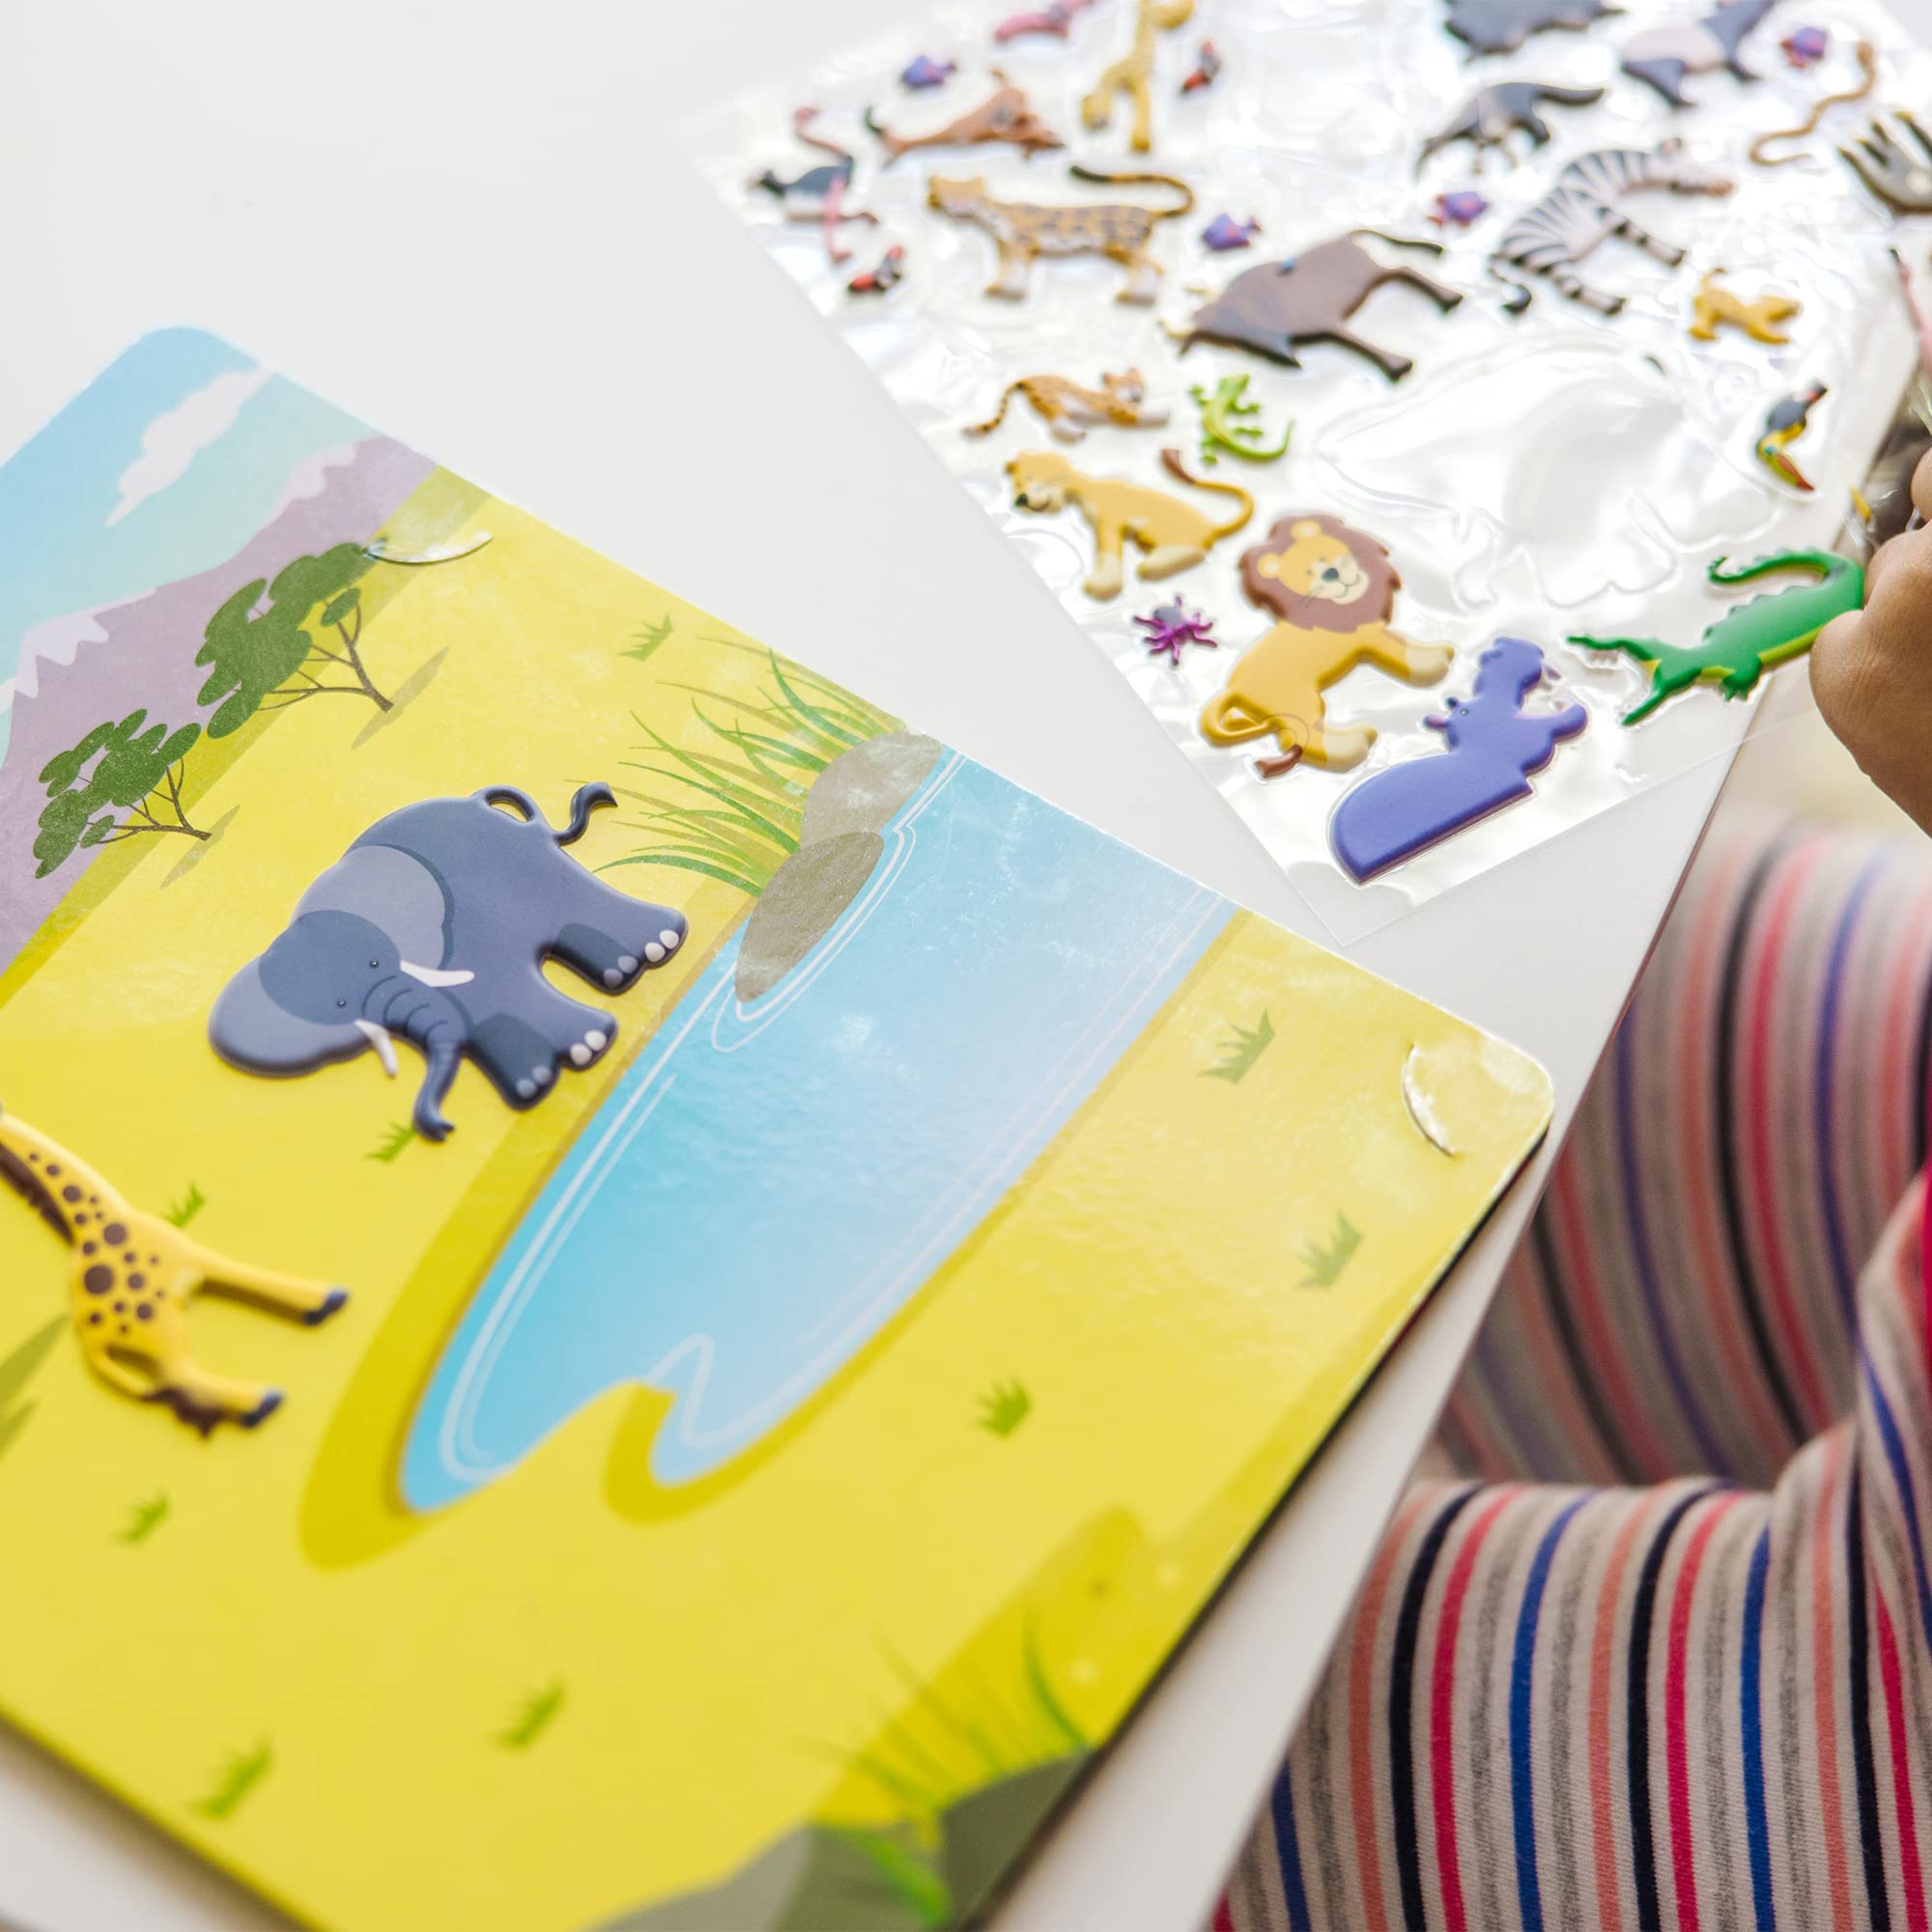 Melissa & Doug Puffy Sticker Play Set: Safari - 42 Reusable Stickers - Travel Activities For Kids, Reusable Sticker Toy, Restickable Sticker Book For Kids Ages 4+